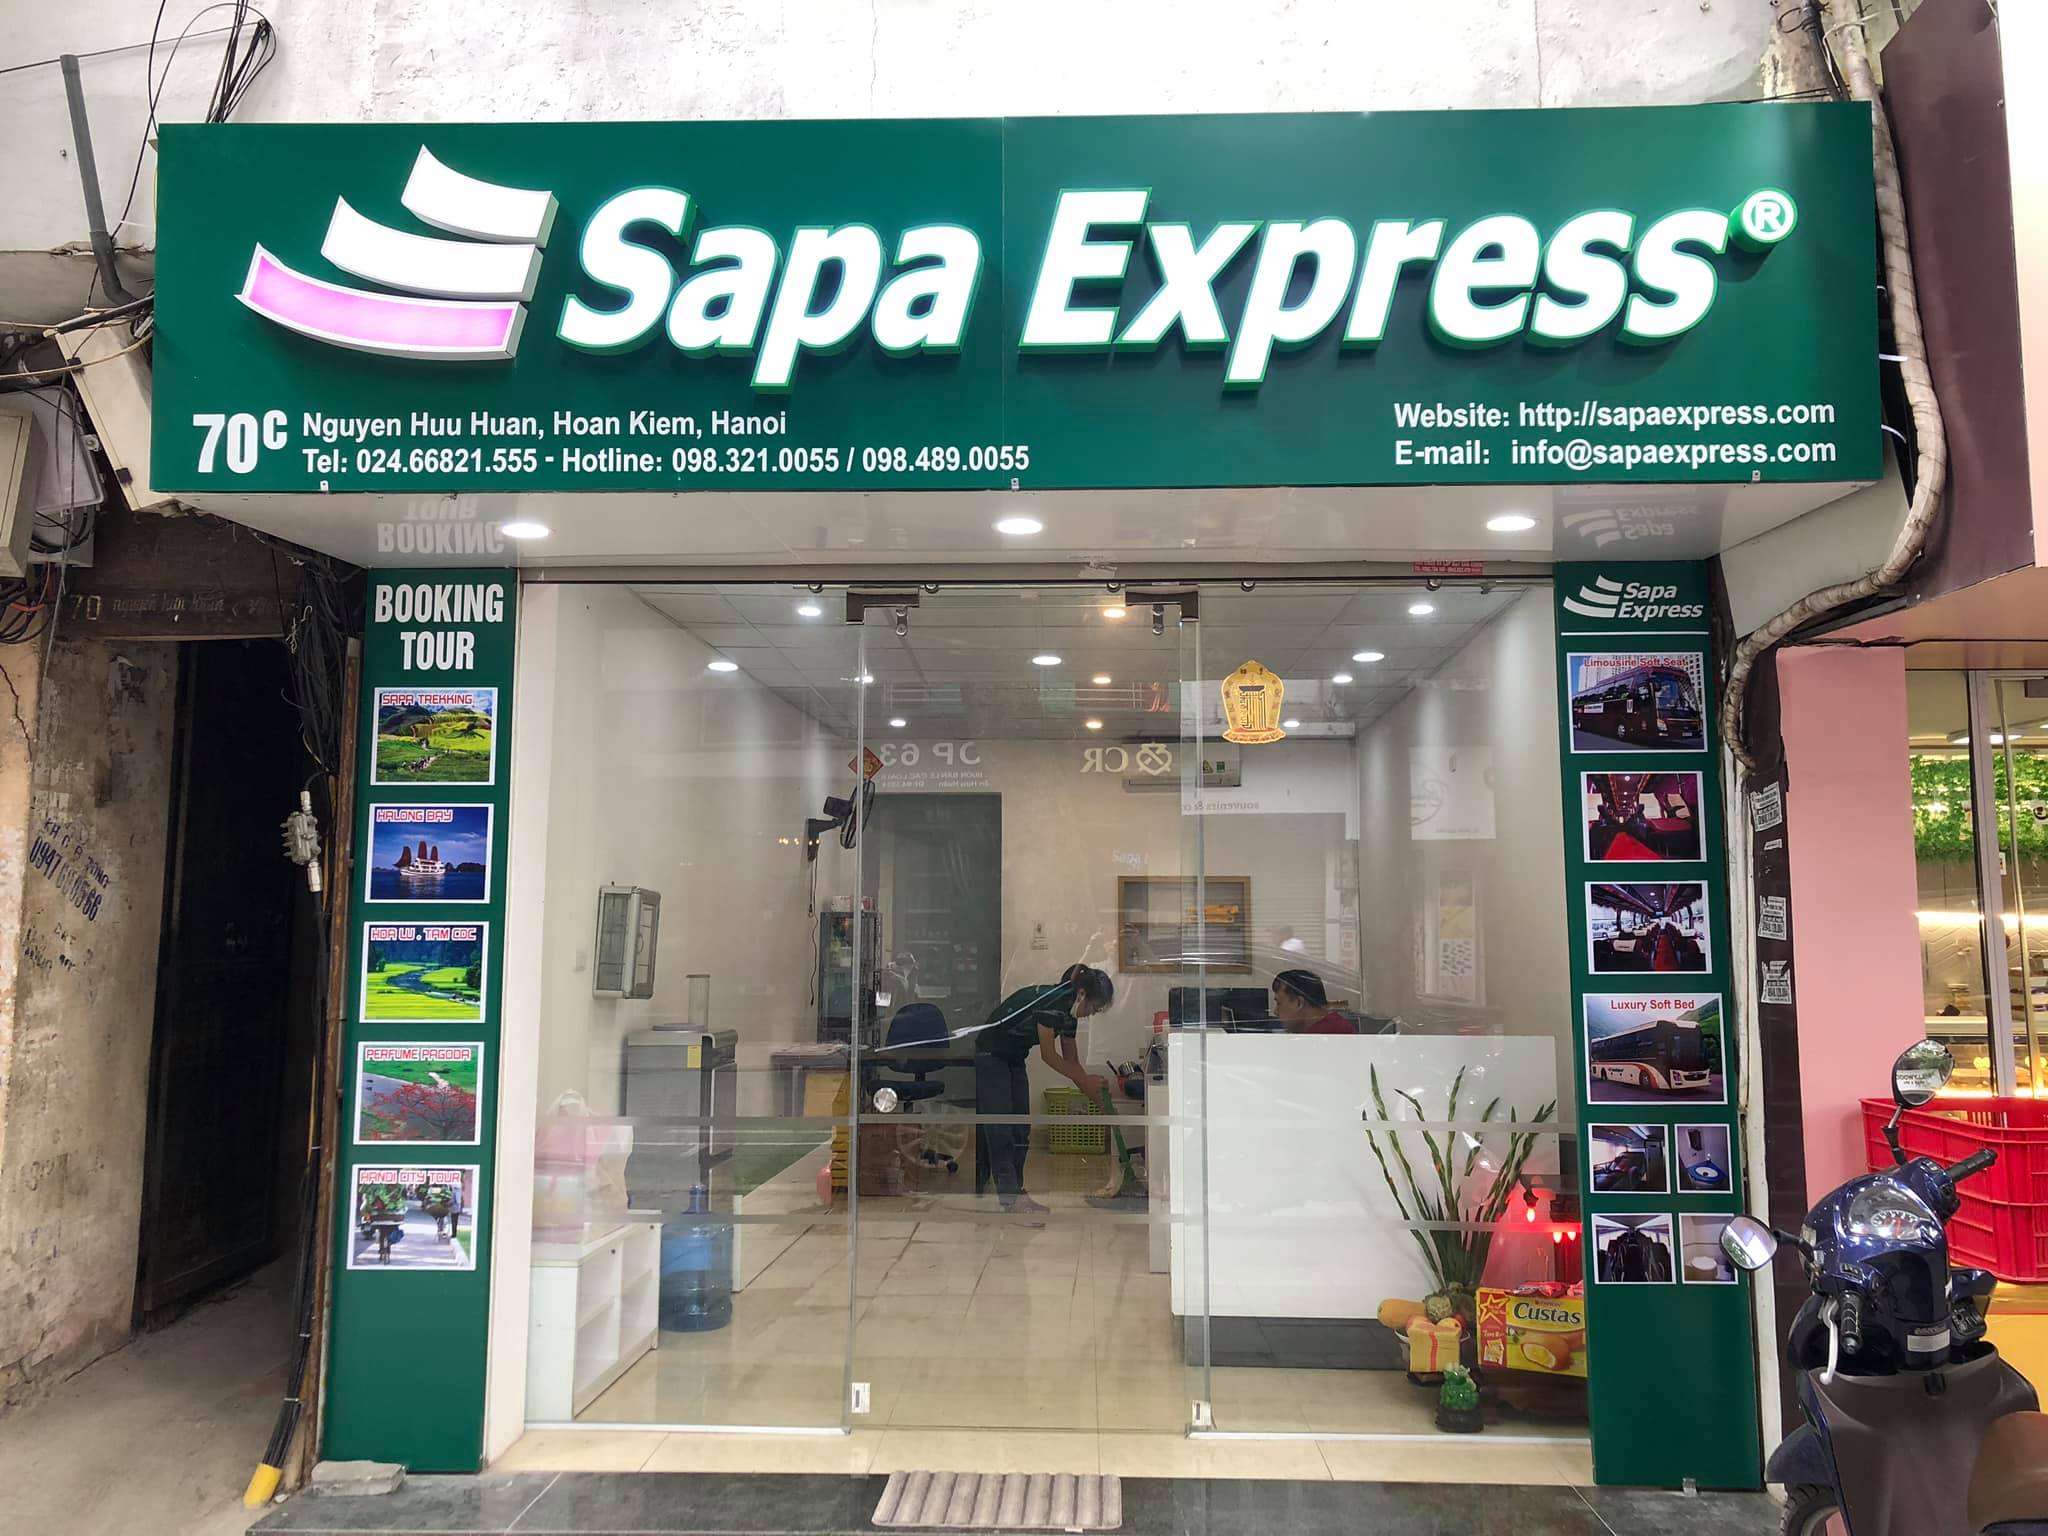 Xehanoisapa-sapa Express